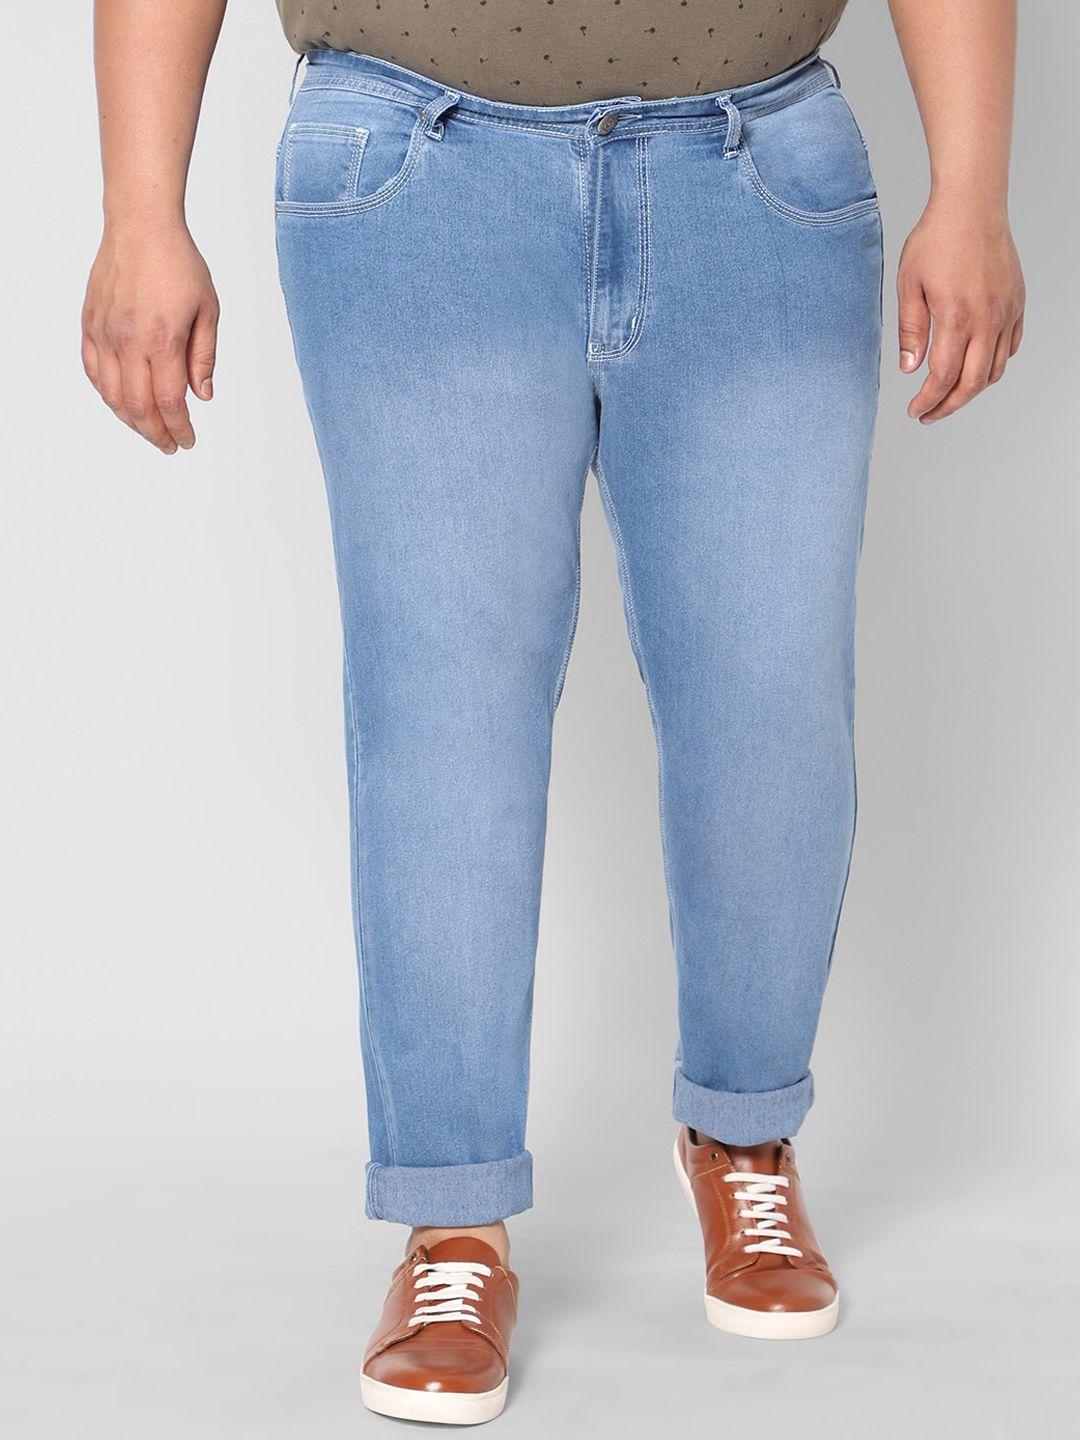 hj hasasi men plus size light fade stretchable cotton jeans